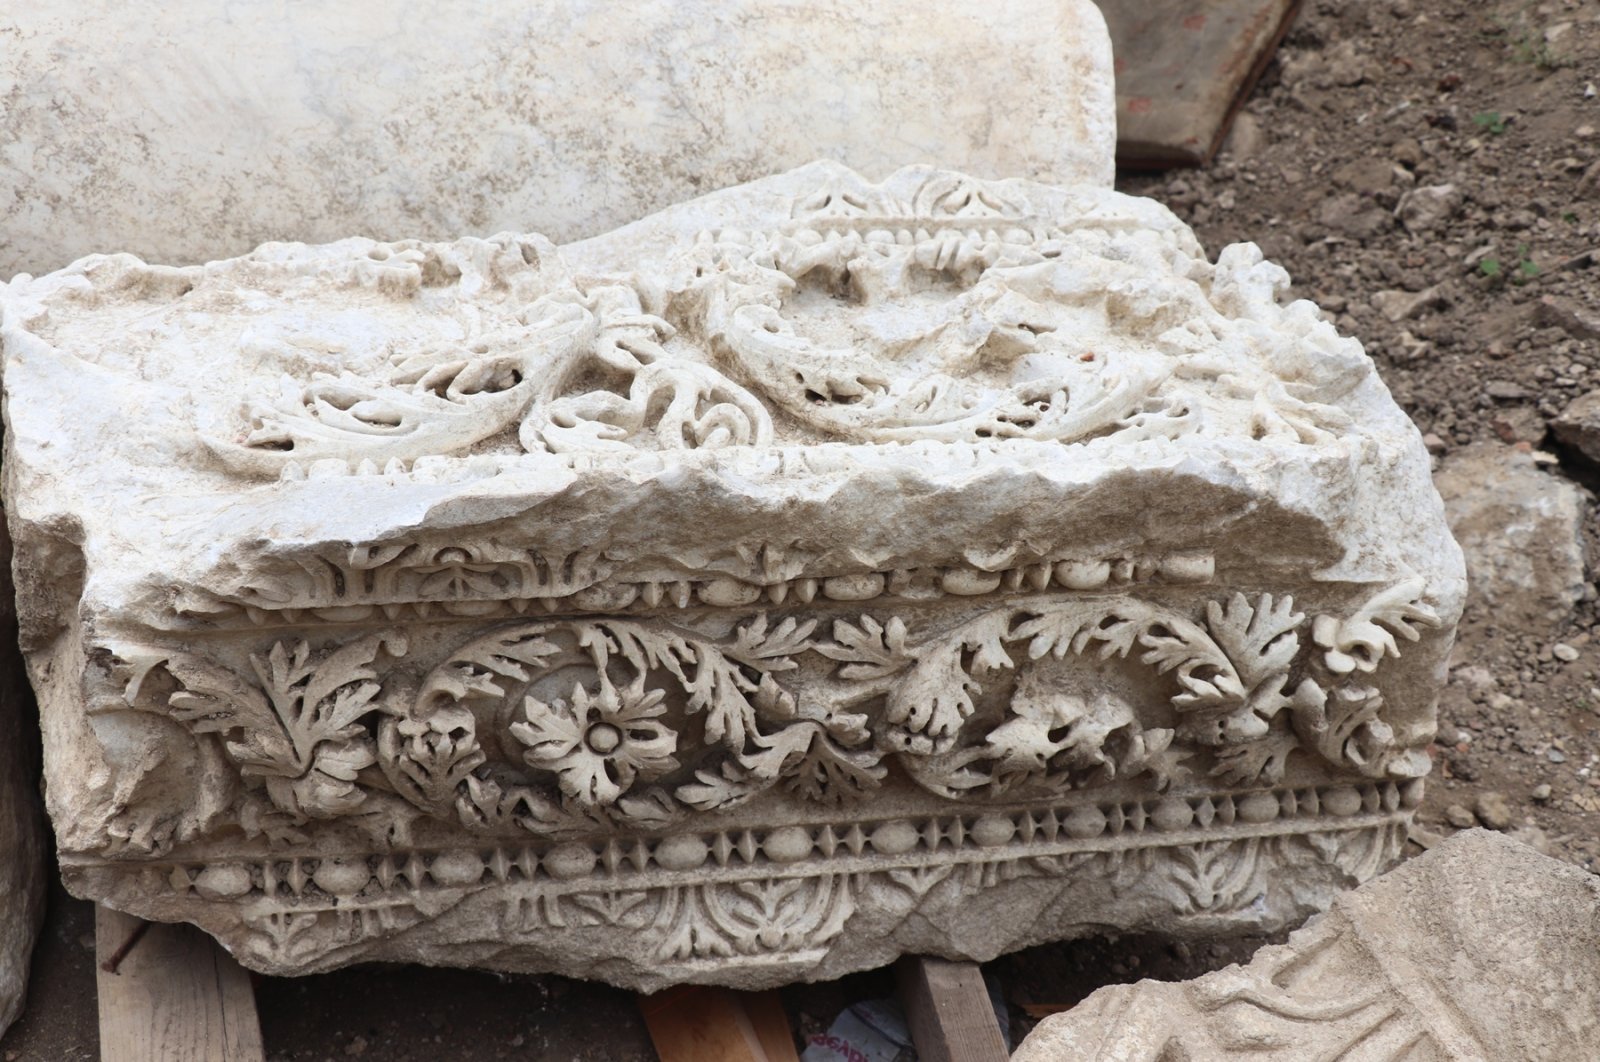 Blok marmer era Romawi ditemukan di Prusias ad Hypium Turki